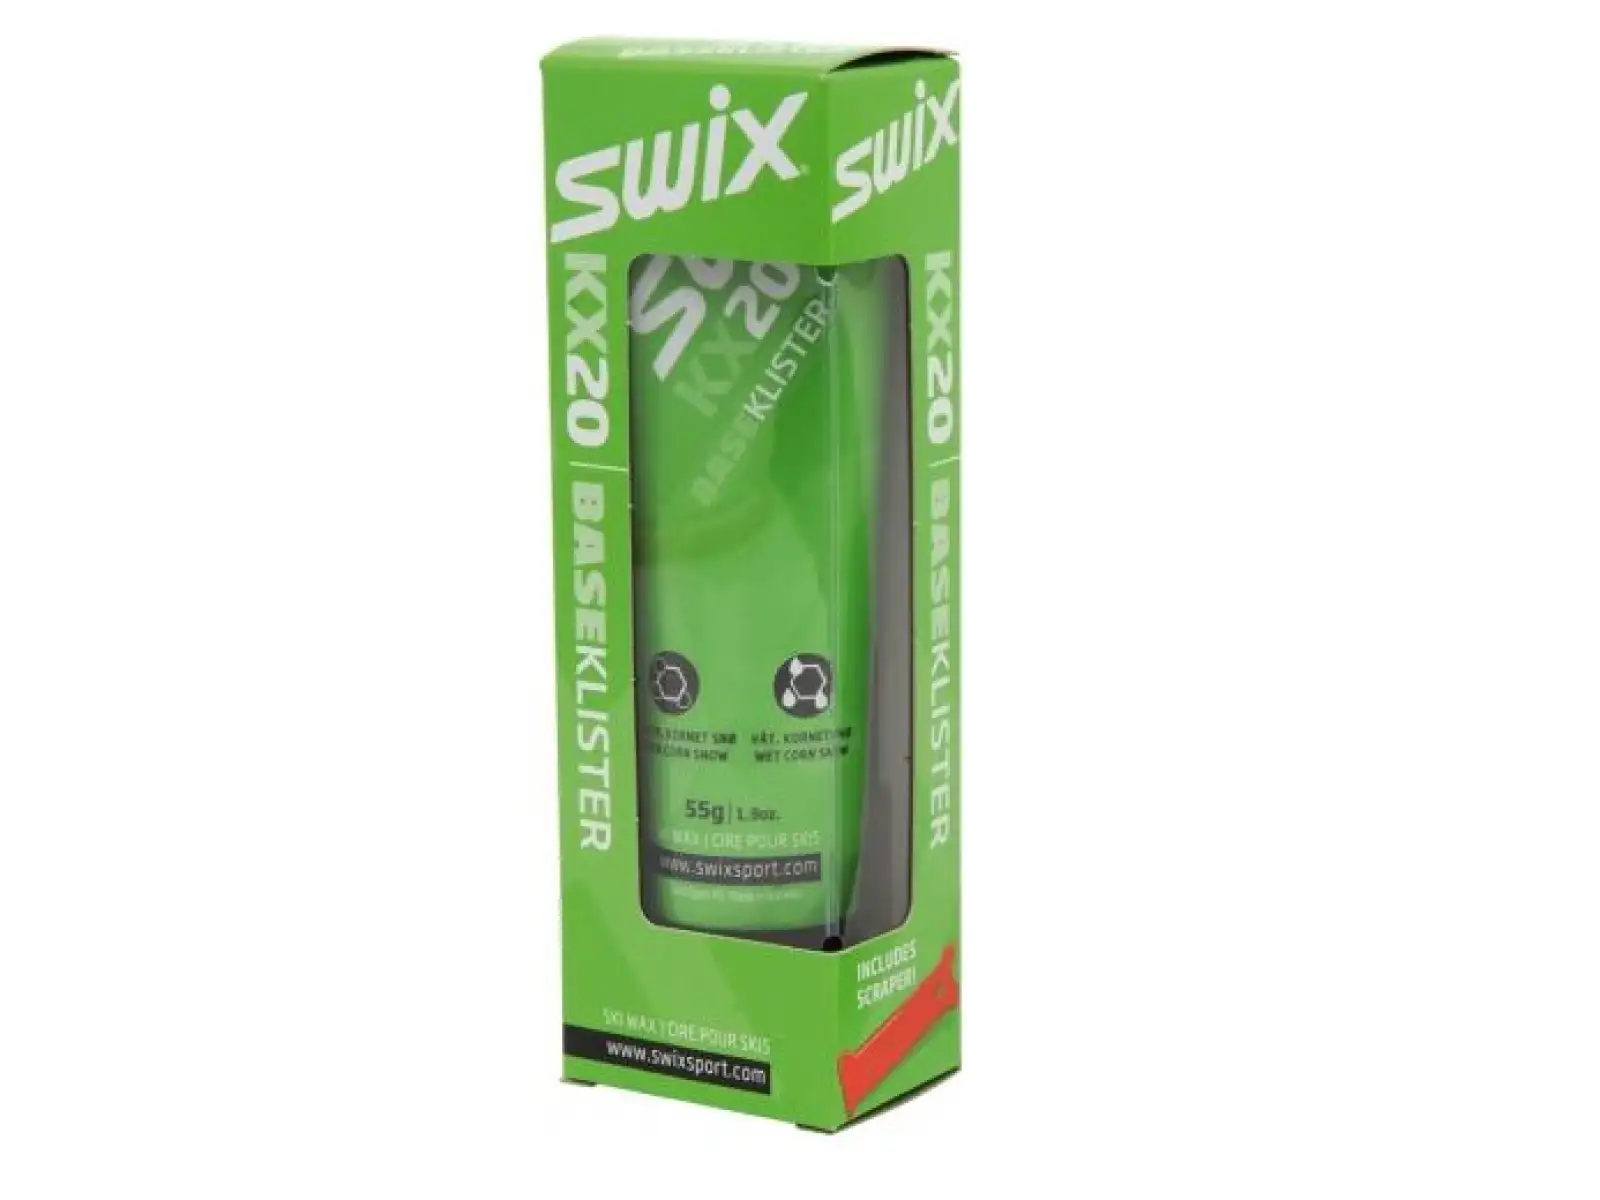 Swix KX20 Base klistr zelený 55 g